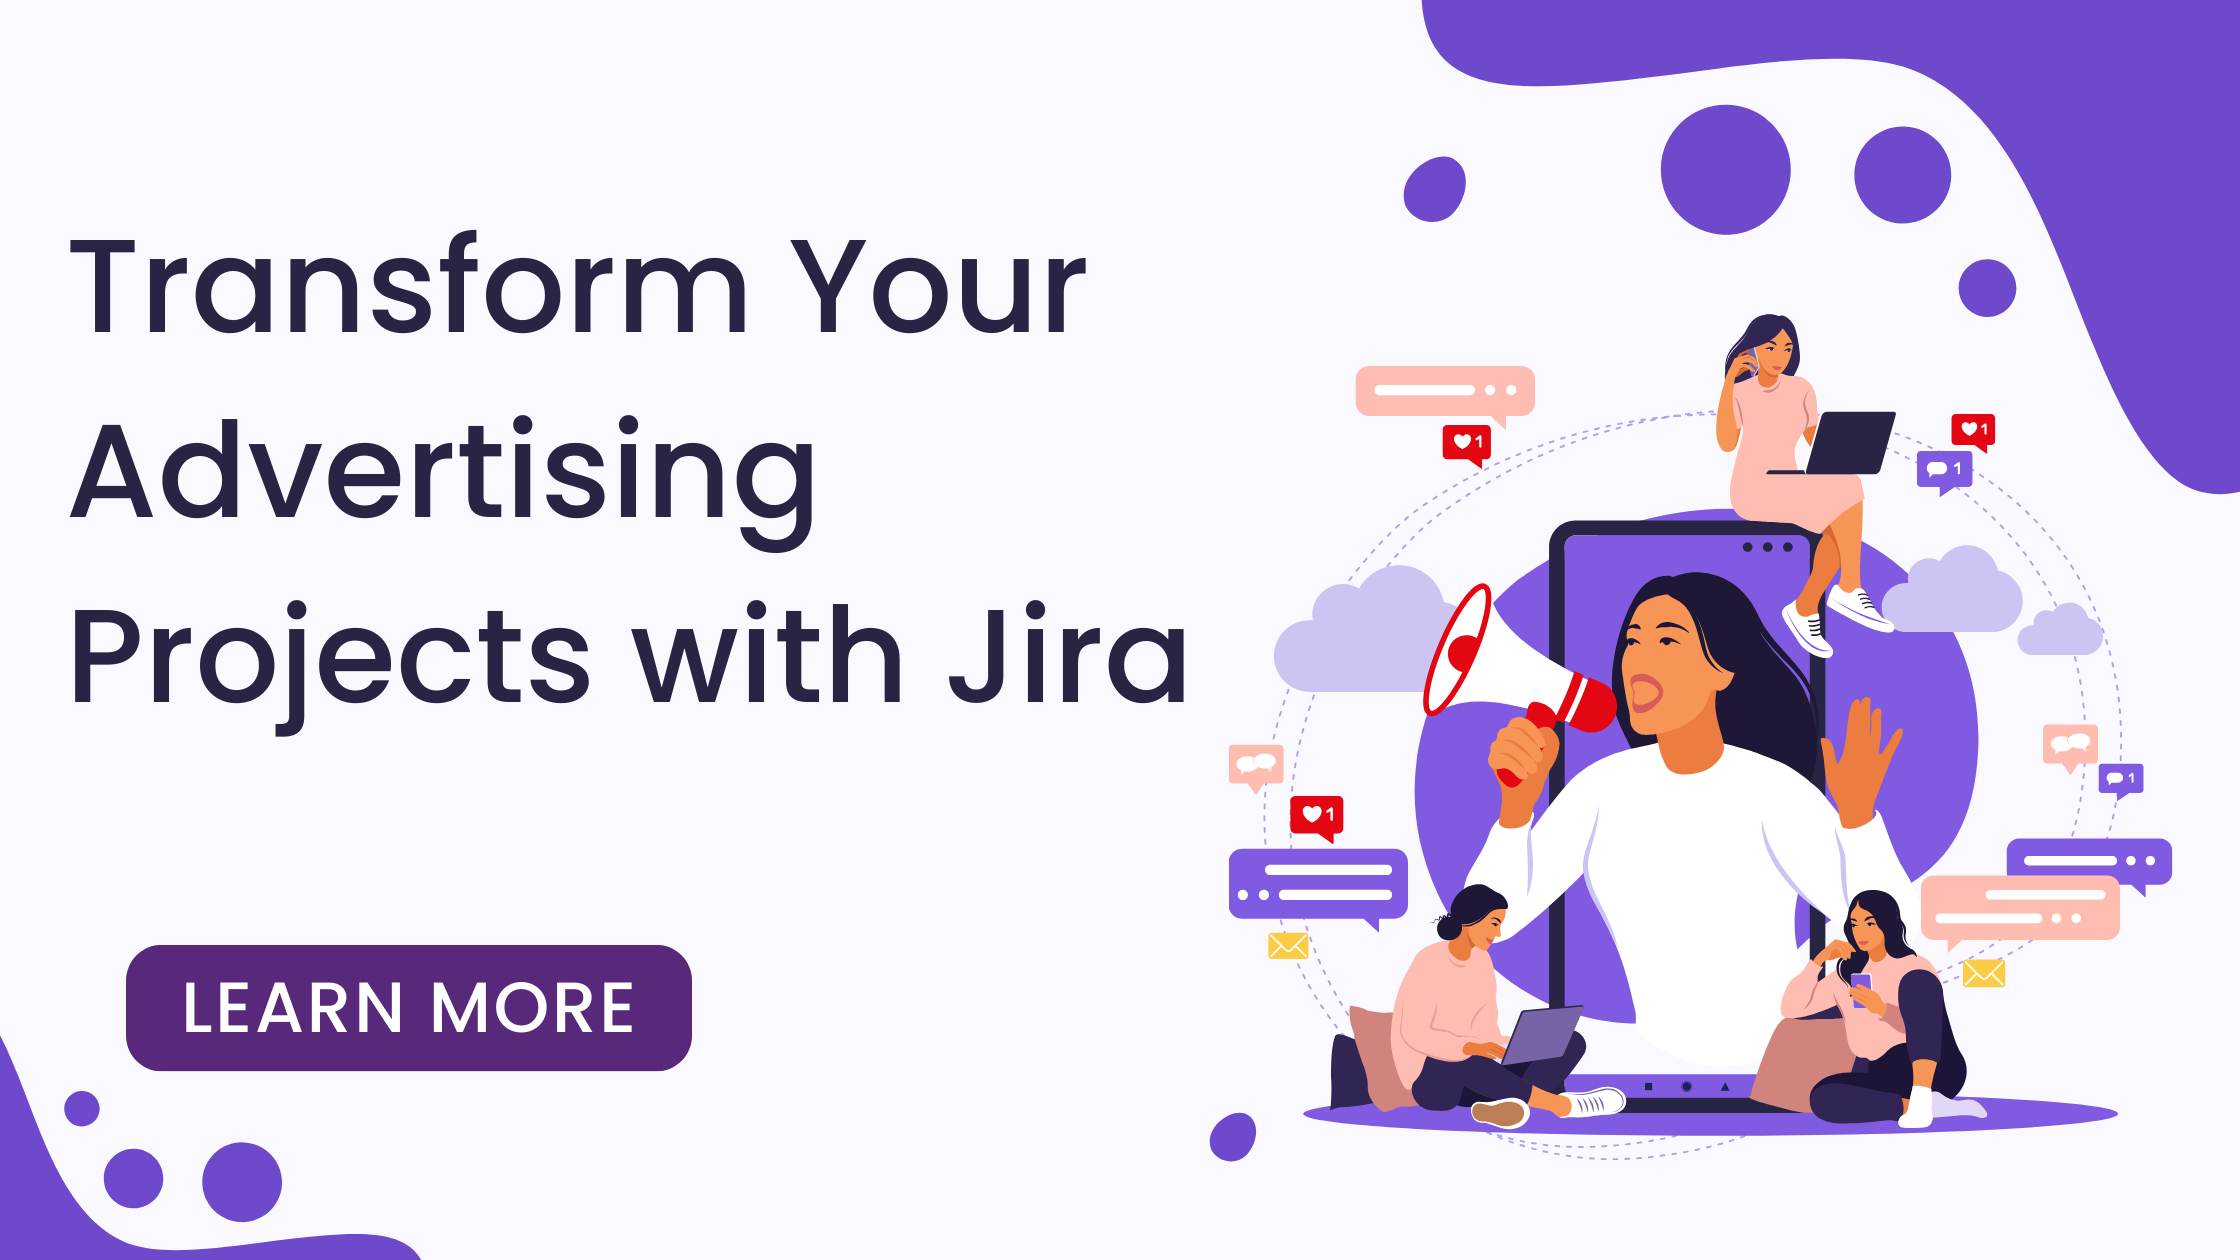 Jira for Business Development in Advertising Agencies